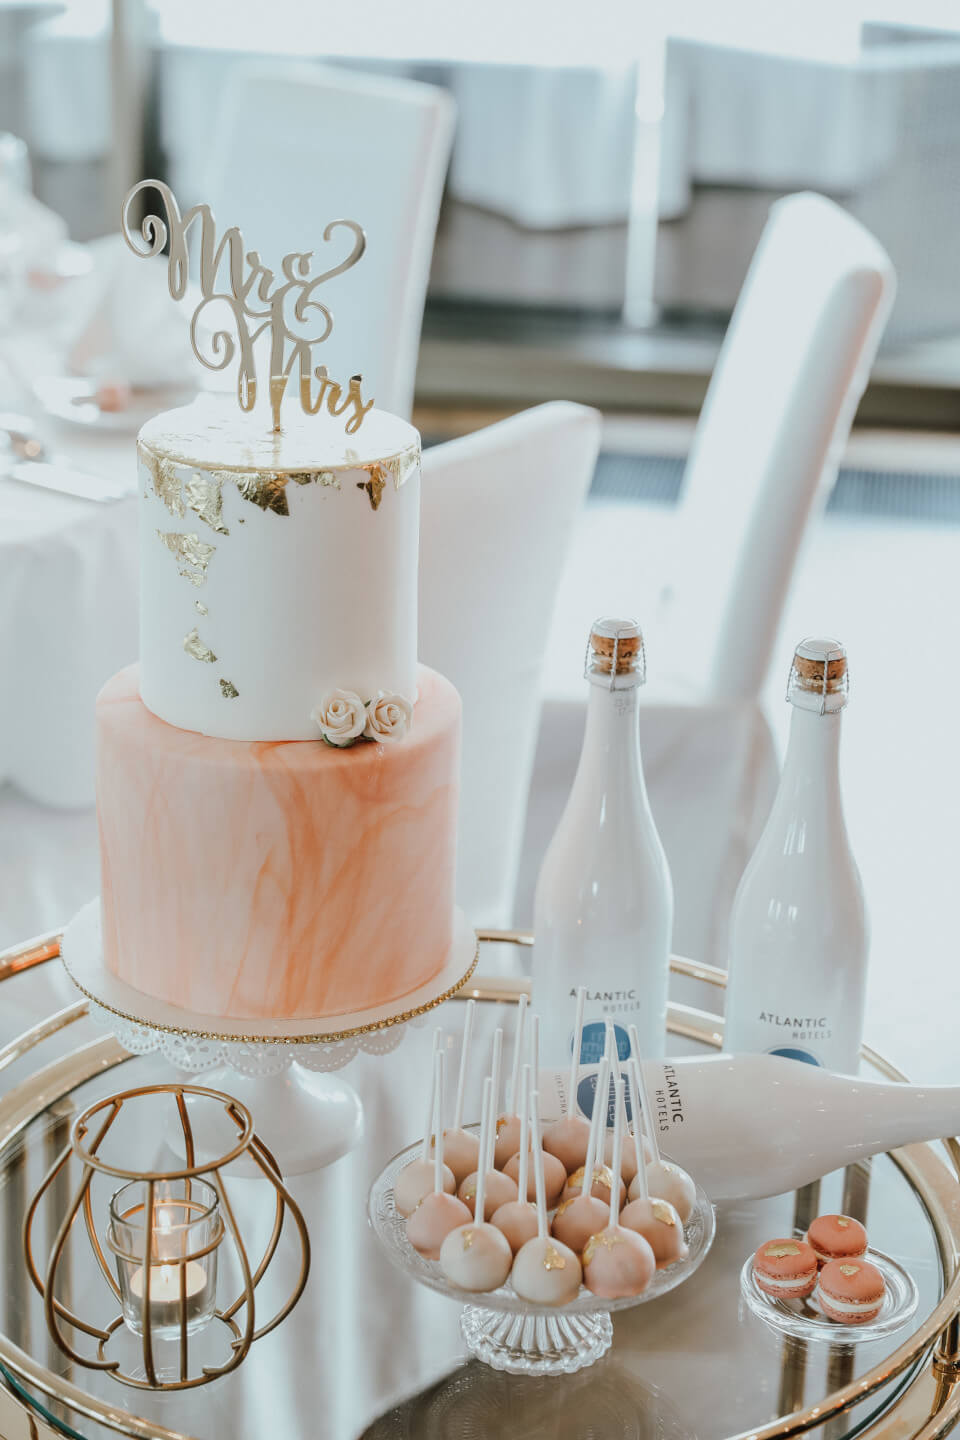 weddingcake and ATLANTIC sparkling wine bottles